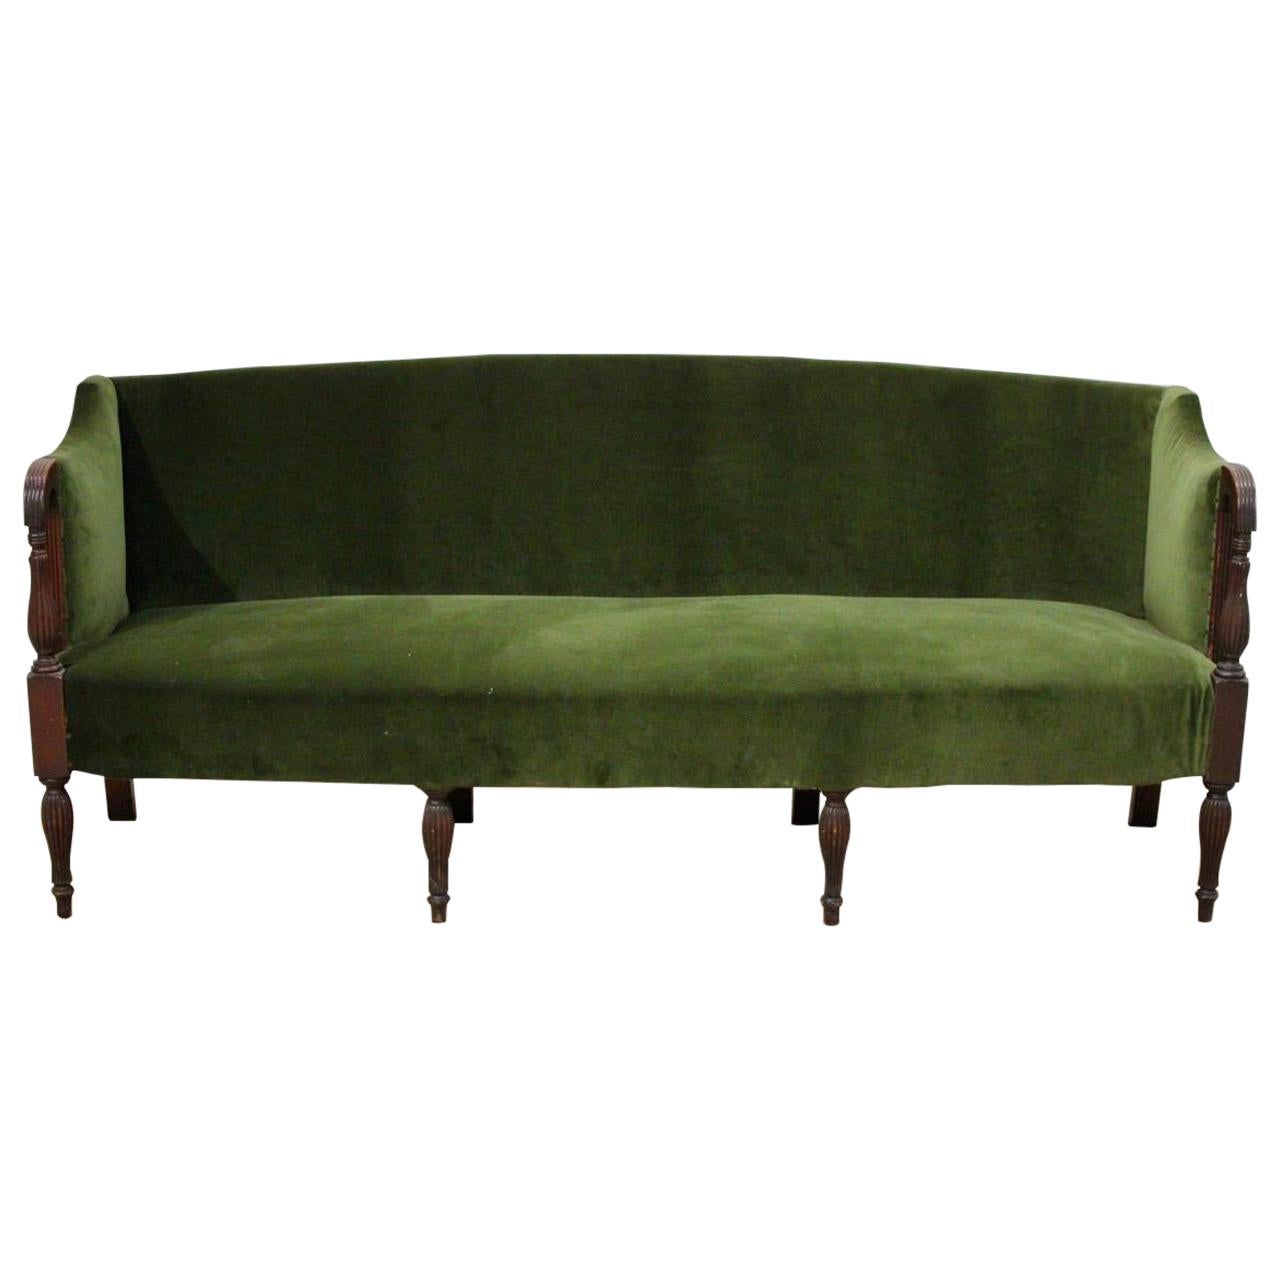 Early 19th Century English Eight-Legged Regency Sofa For Sale